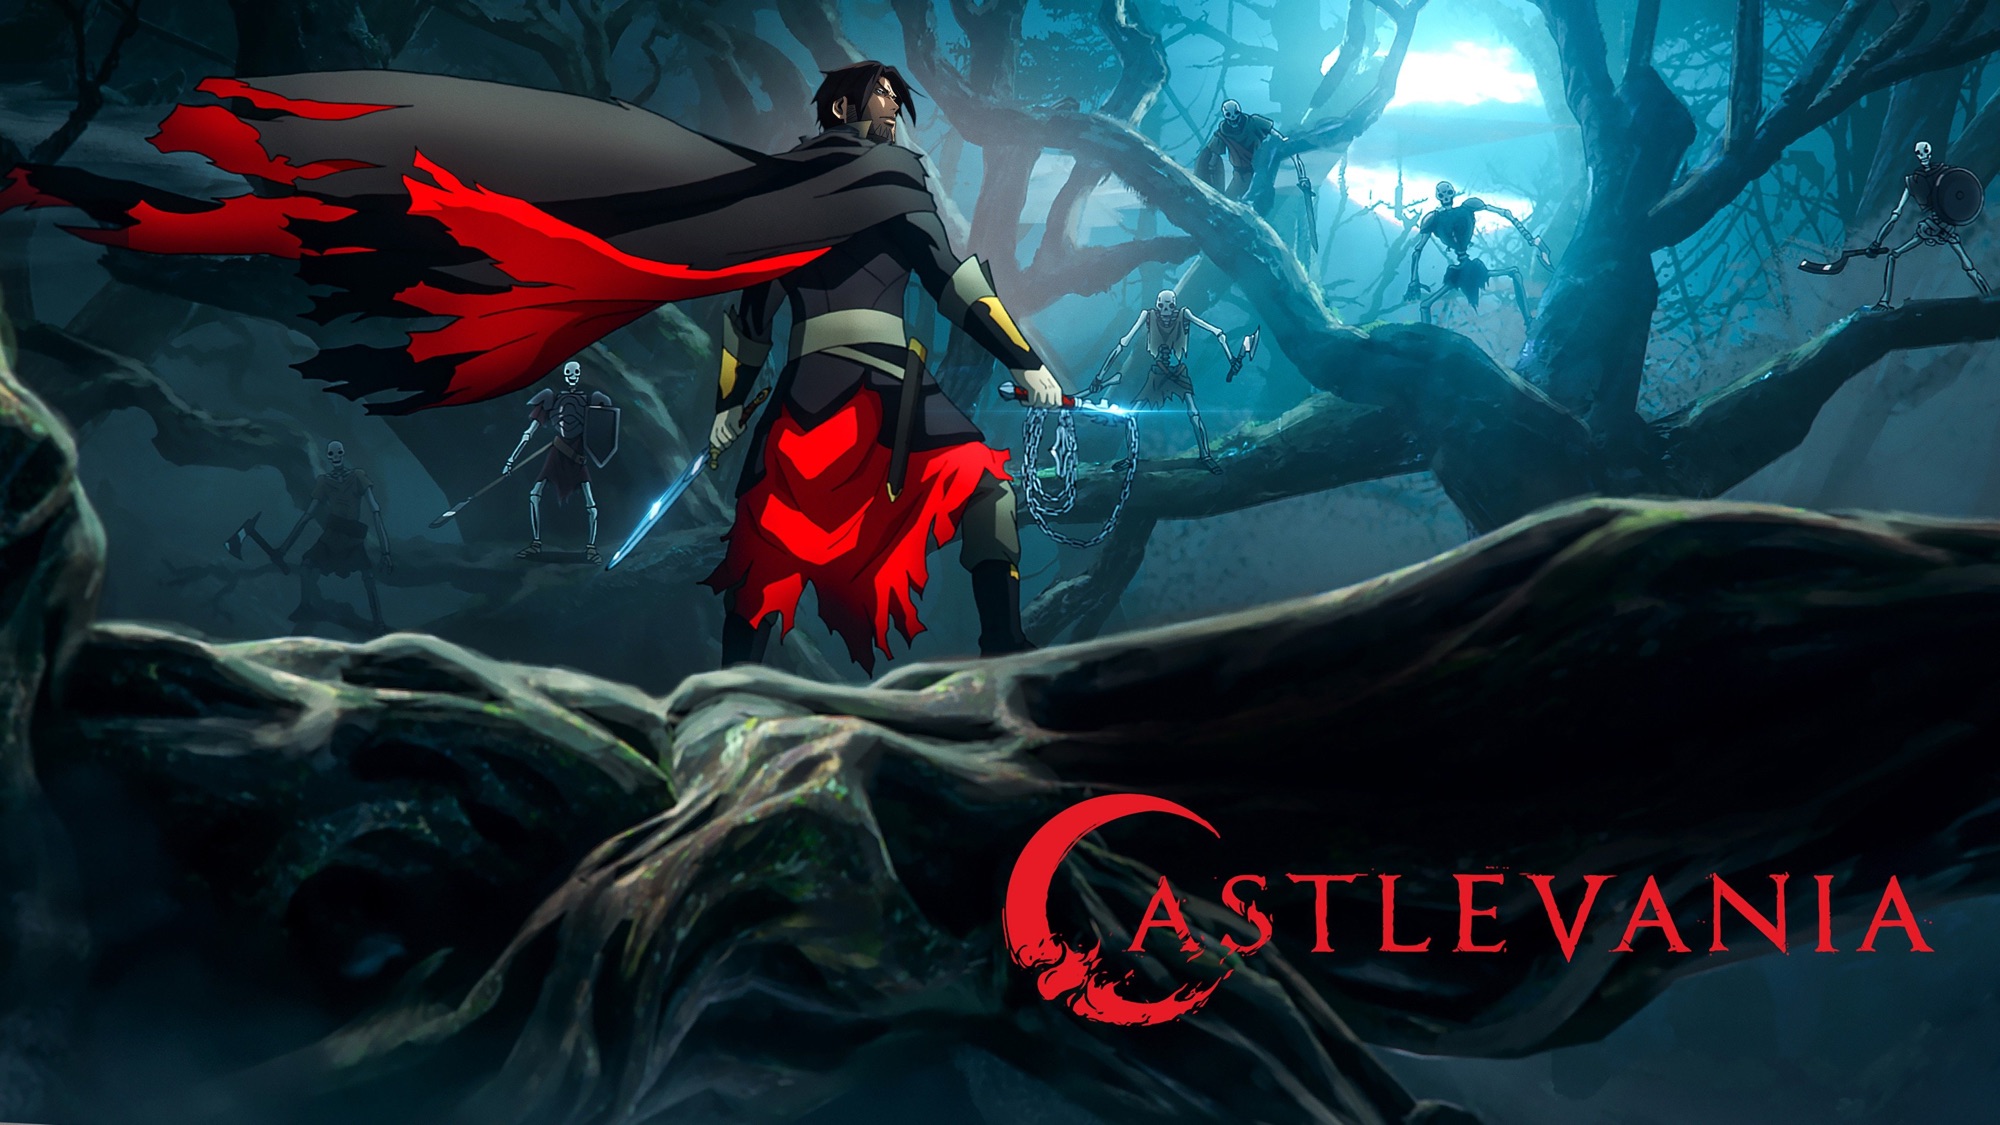 Sypha, Trevor, Alucard and 'Castlevania' Return to Netflix May 13 |  Animation World Network